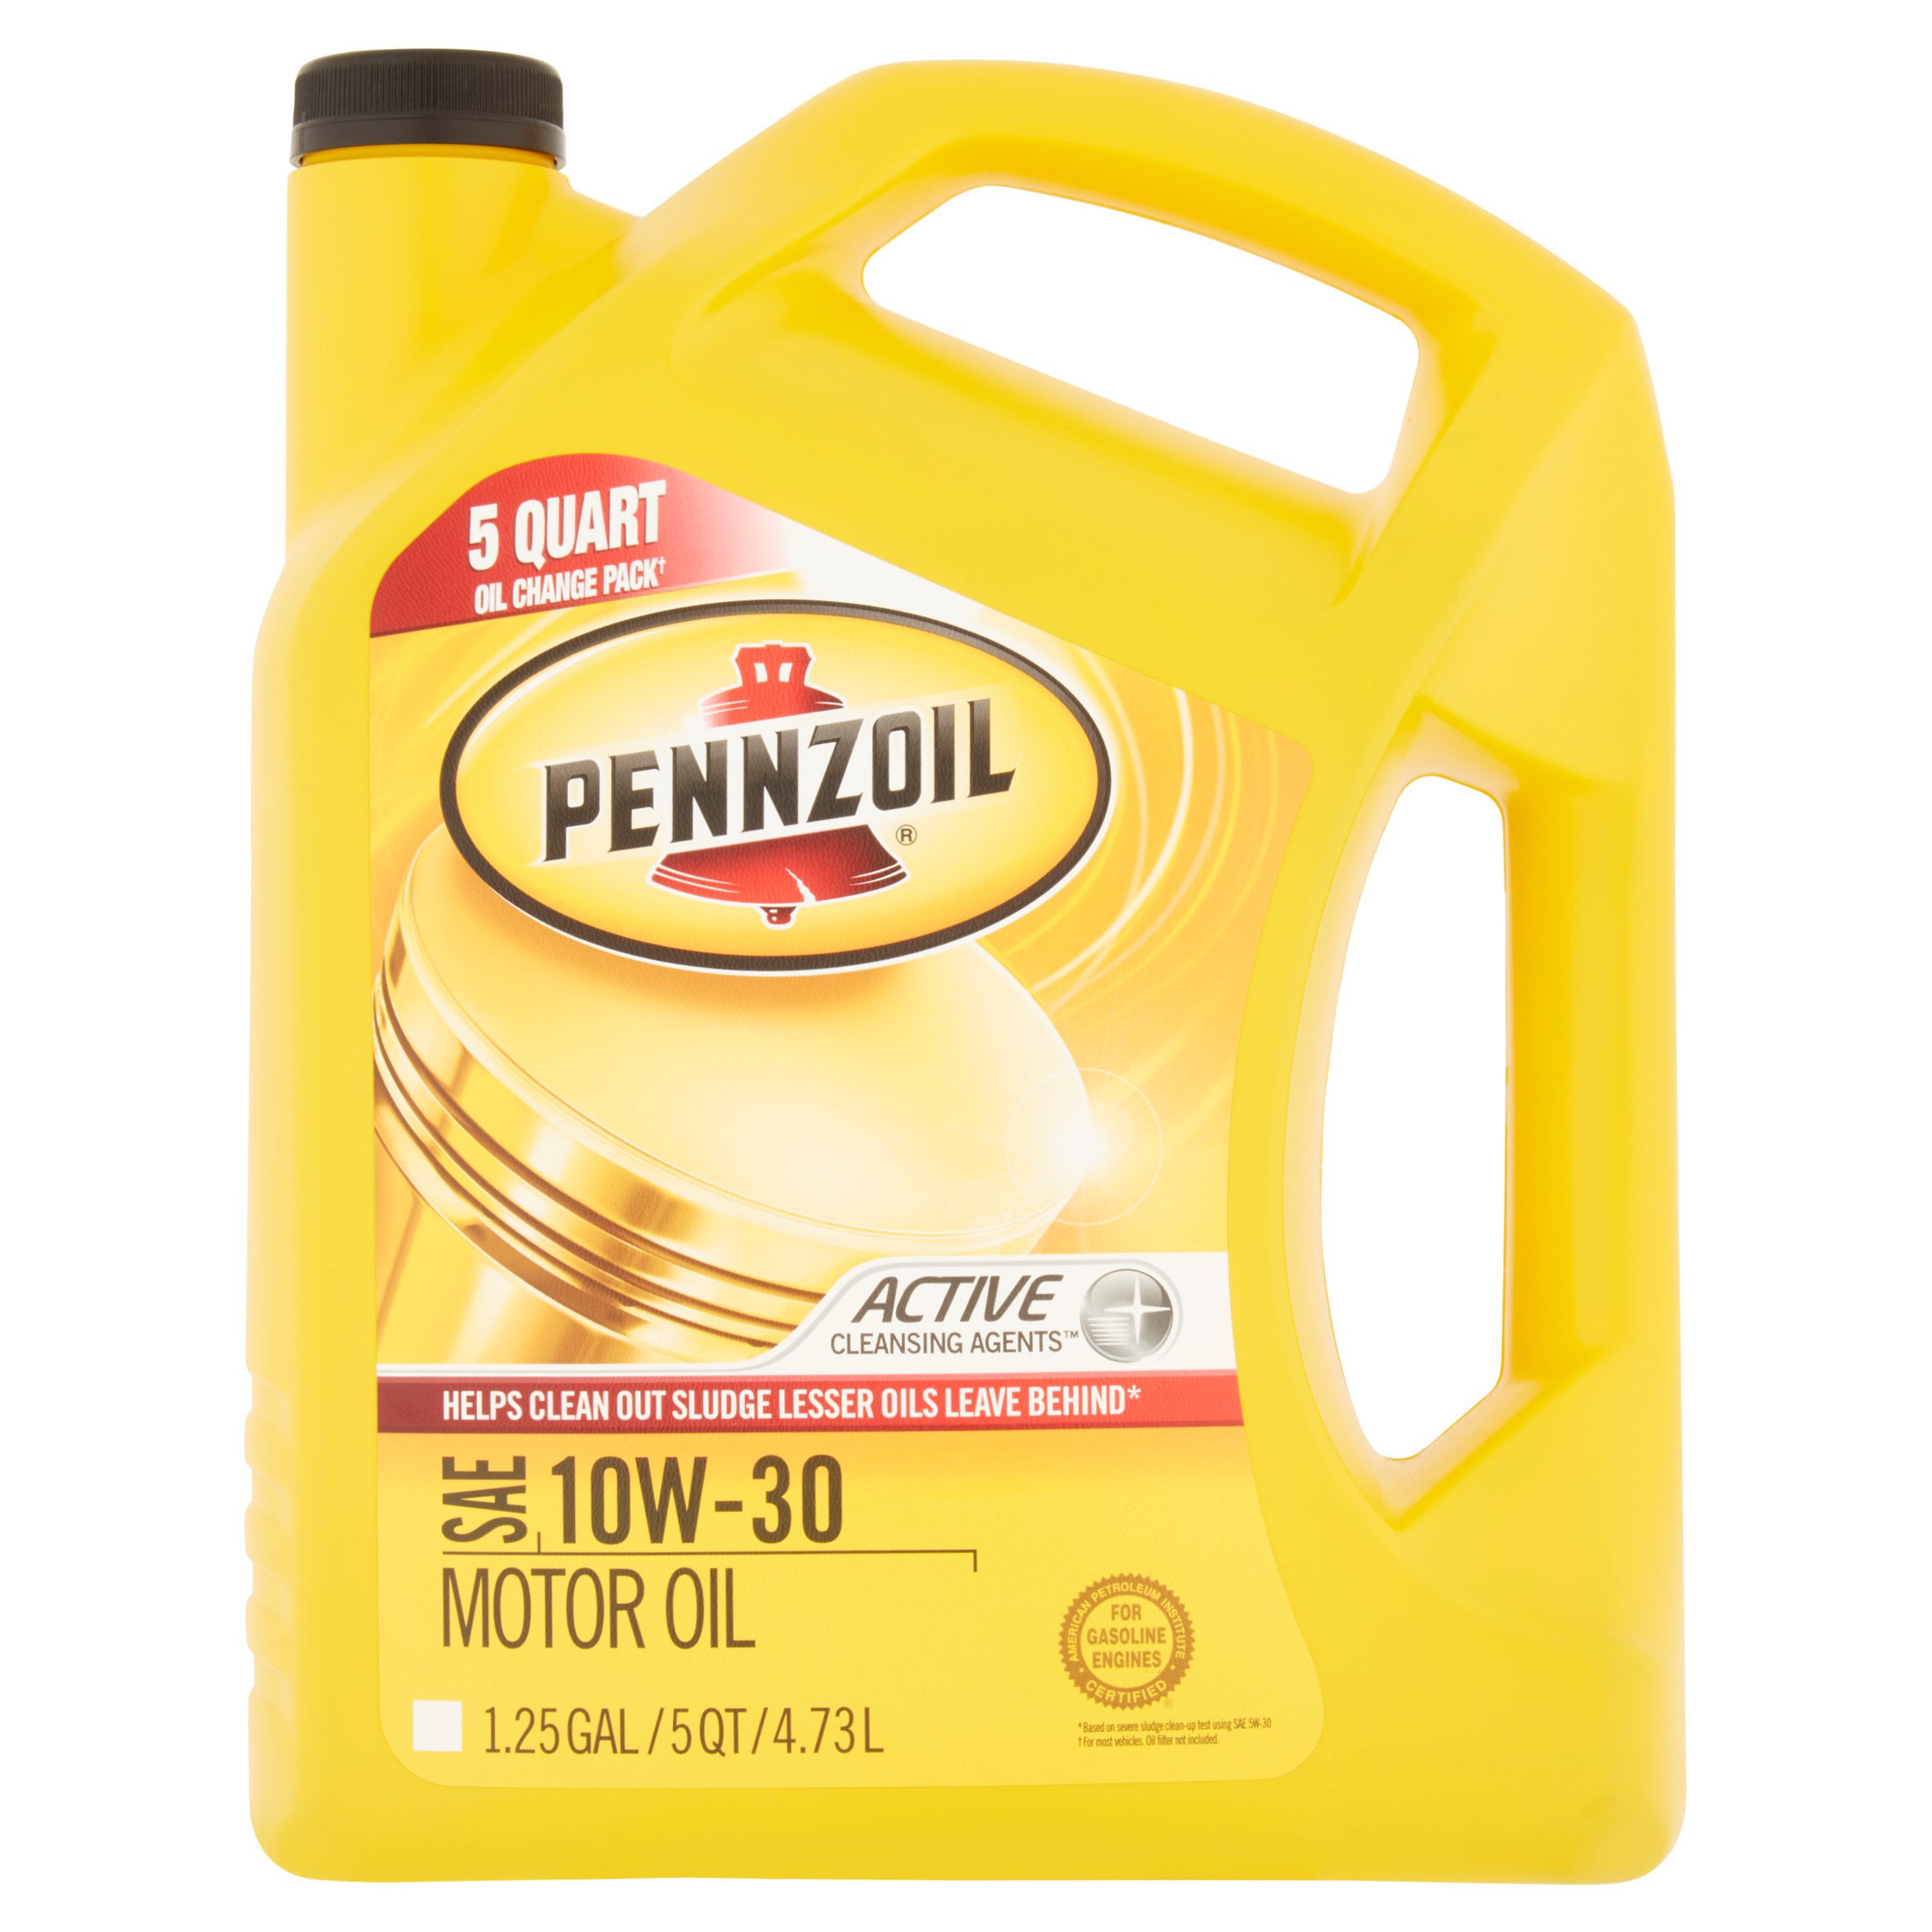 Pennzoil Active Cleansing Agents Sae 10w 30 Motor Oil 1 25 Gal Walmart Com Walmart Com